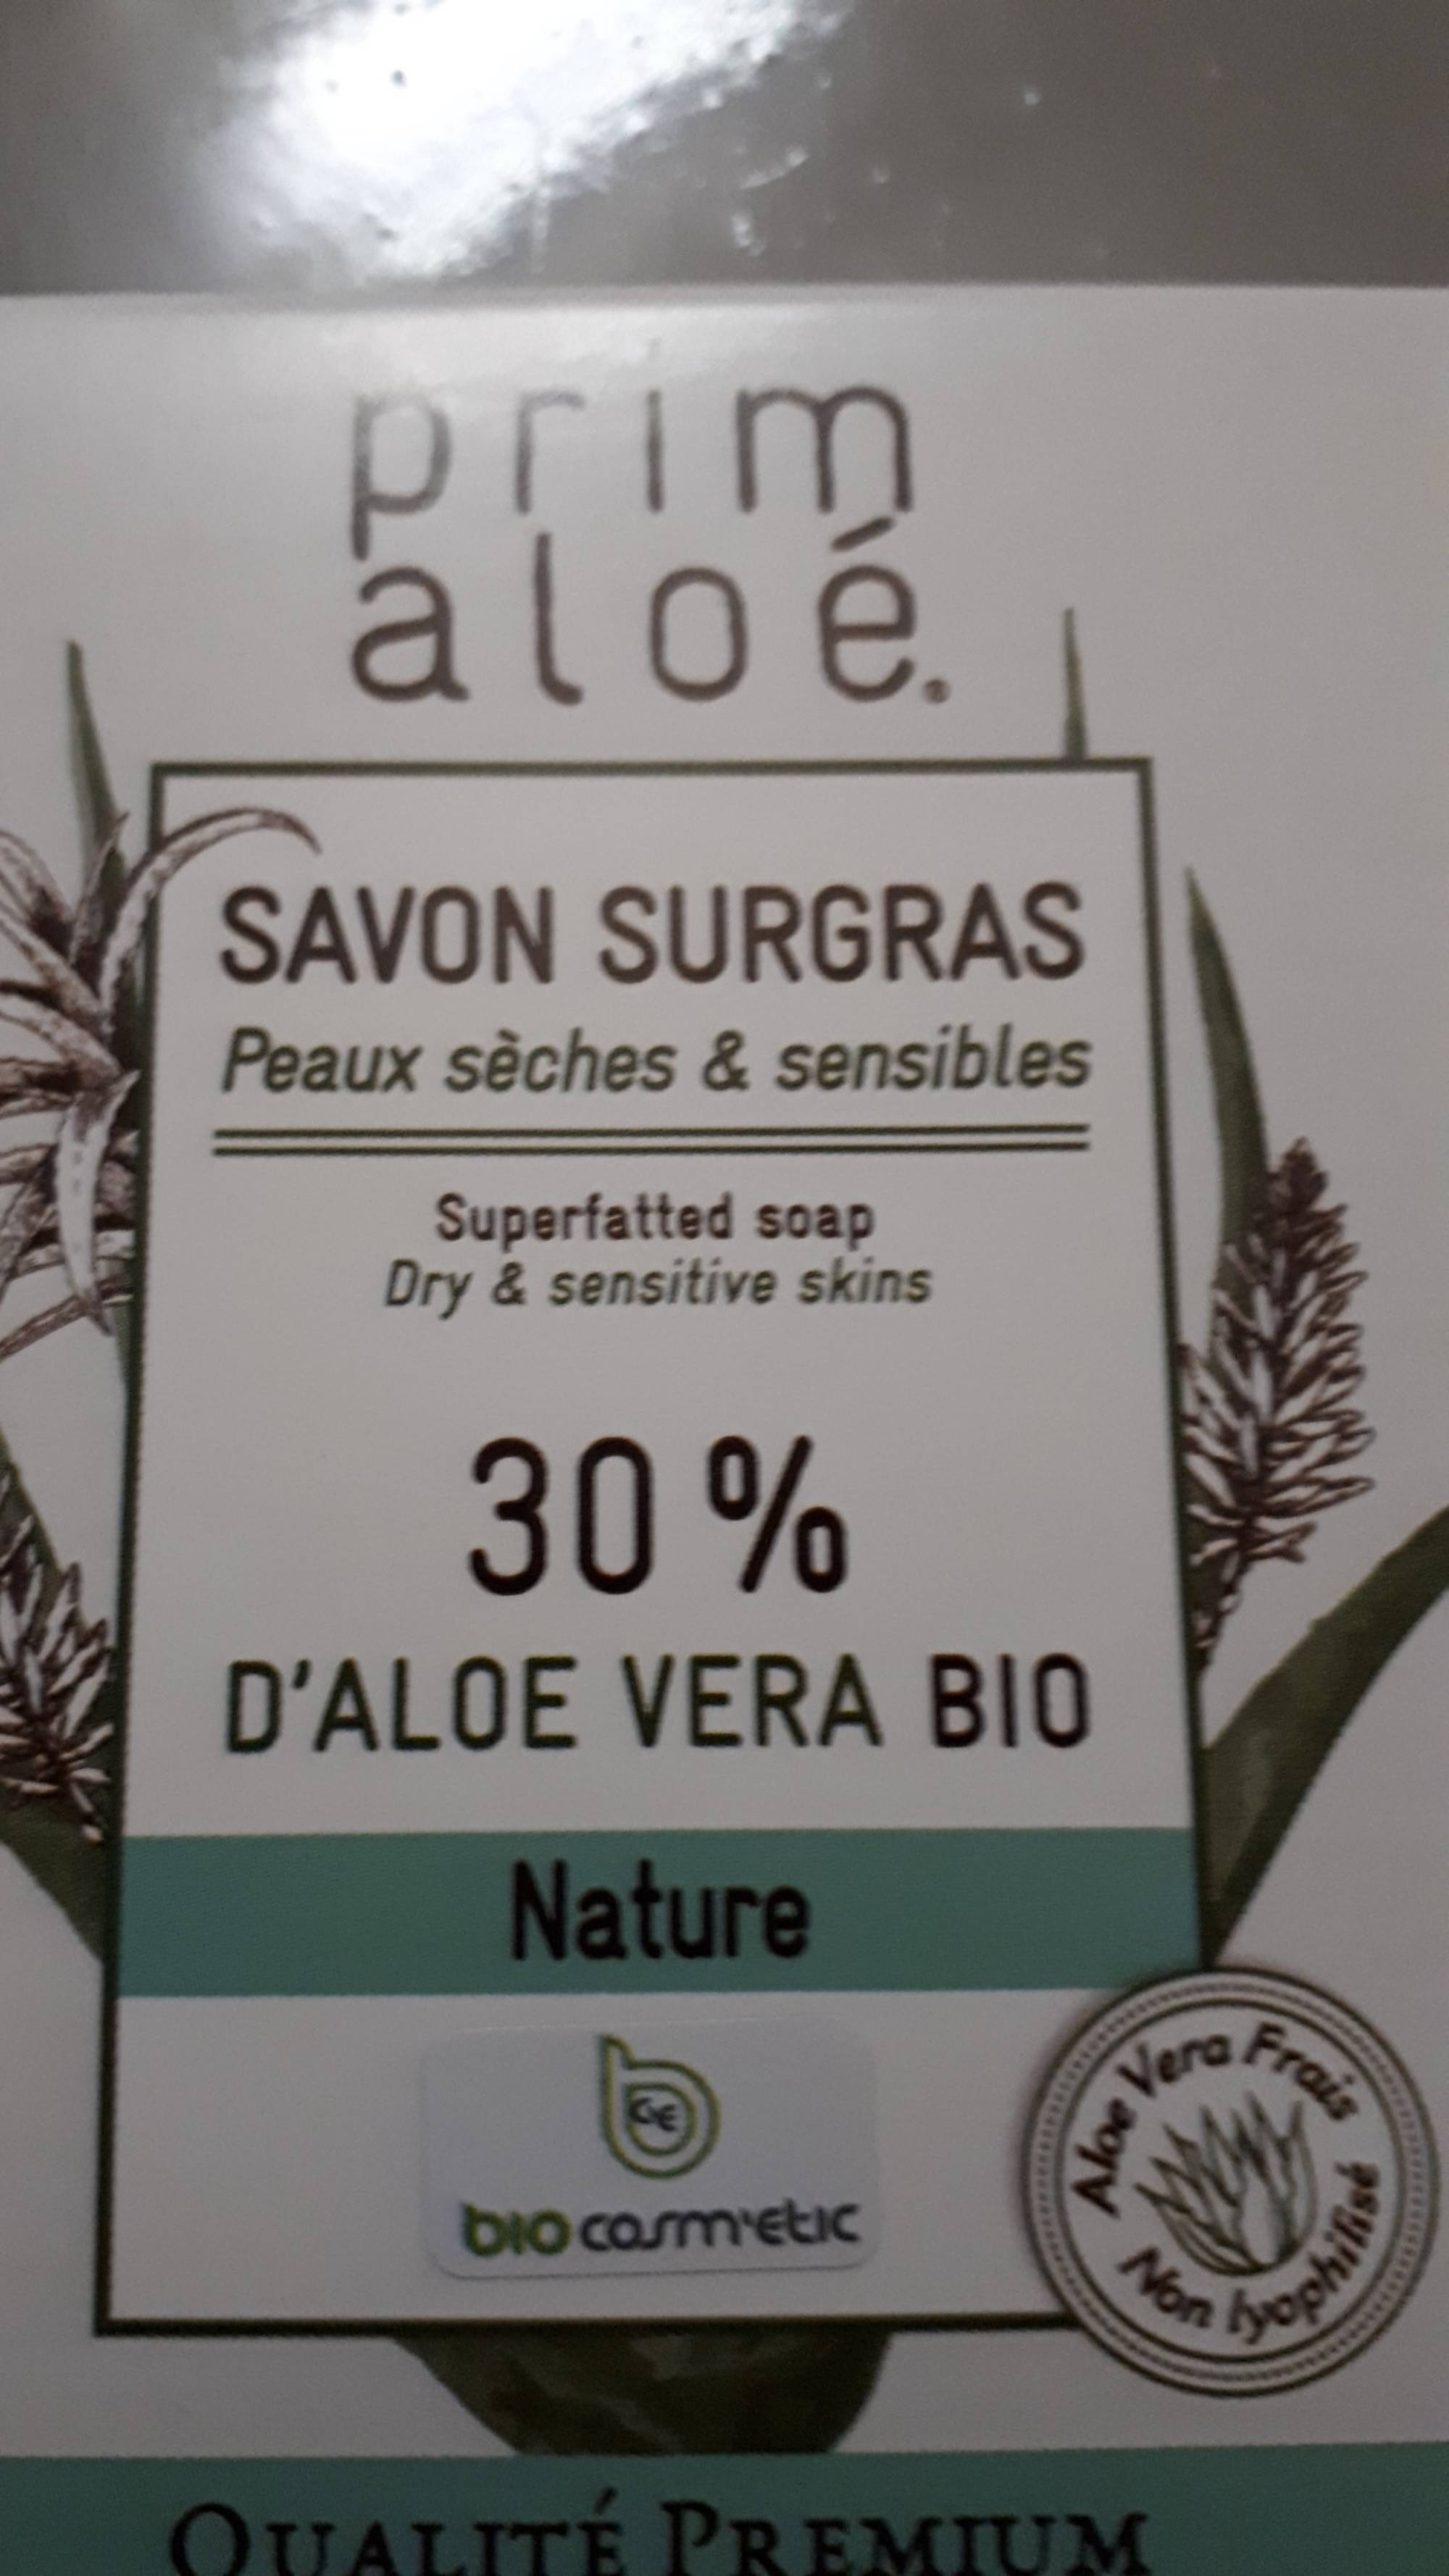 PRIM ALOÉ - Nature - Savon surgras 30% d'aloe vera bio